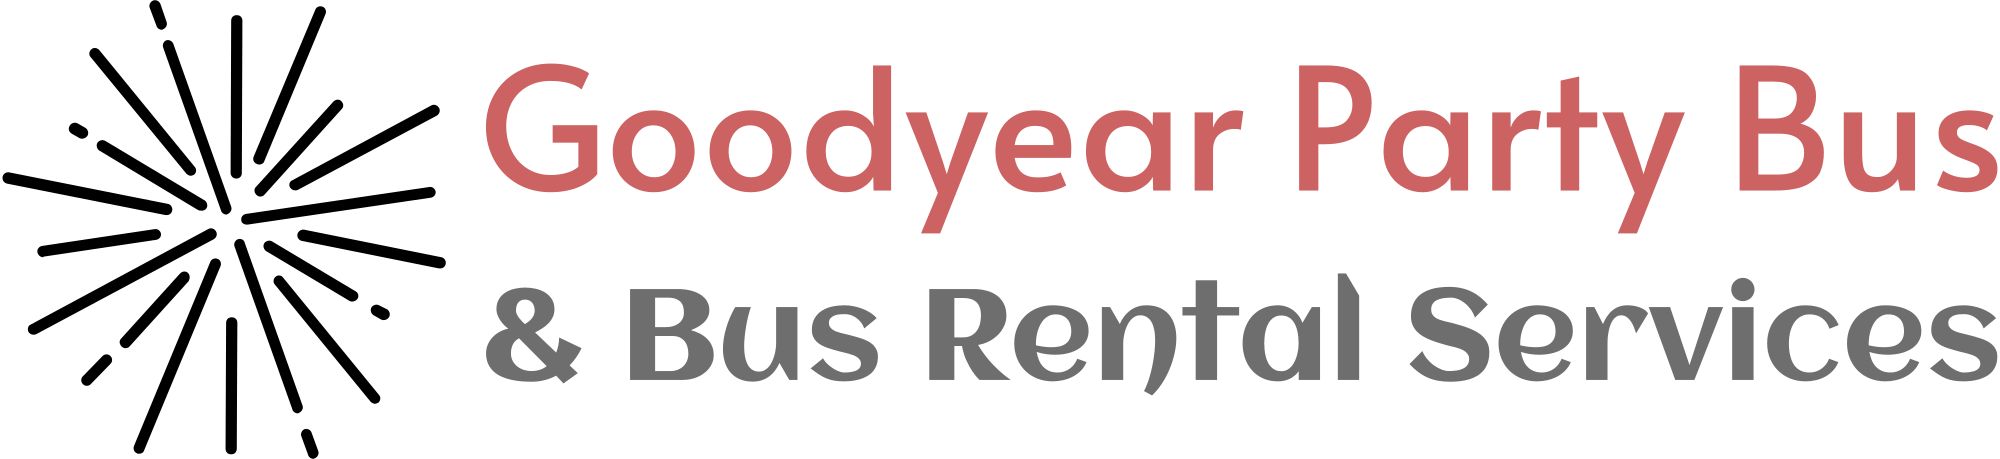 Party Bus Goodyear logo